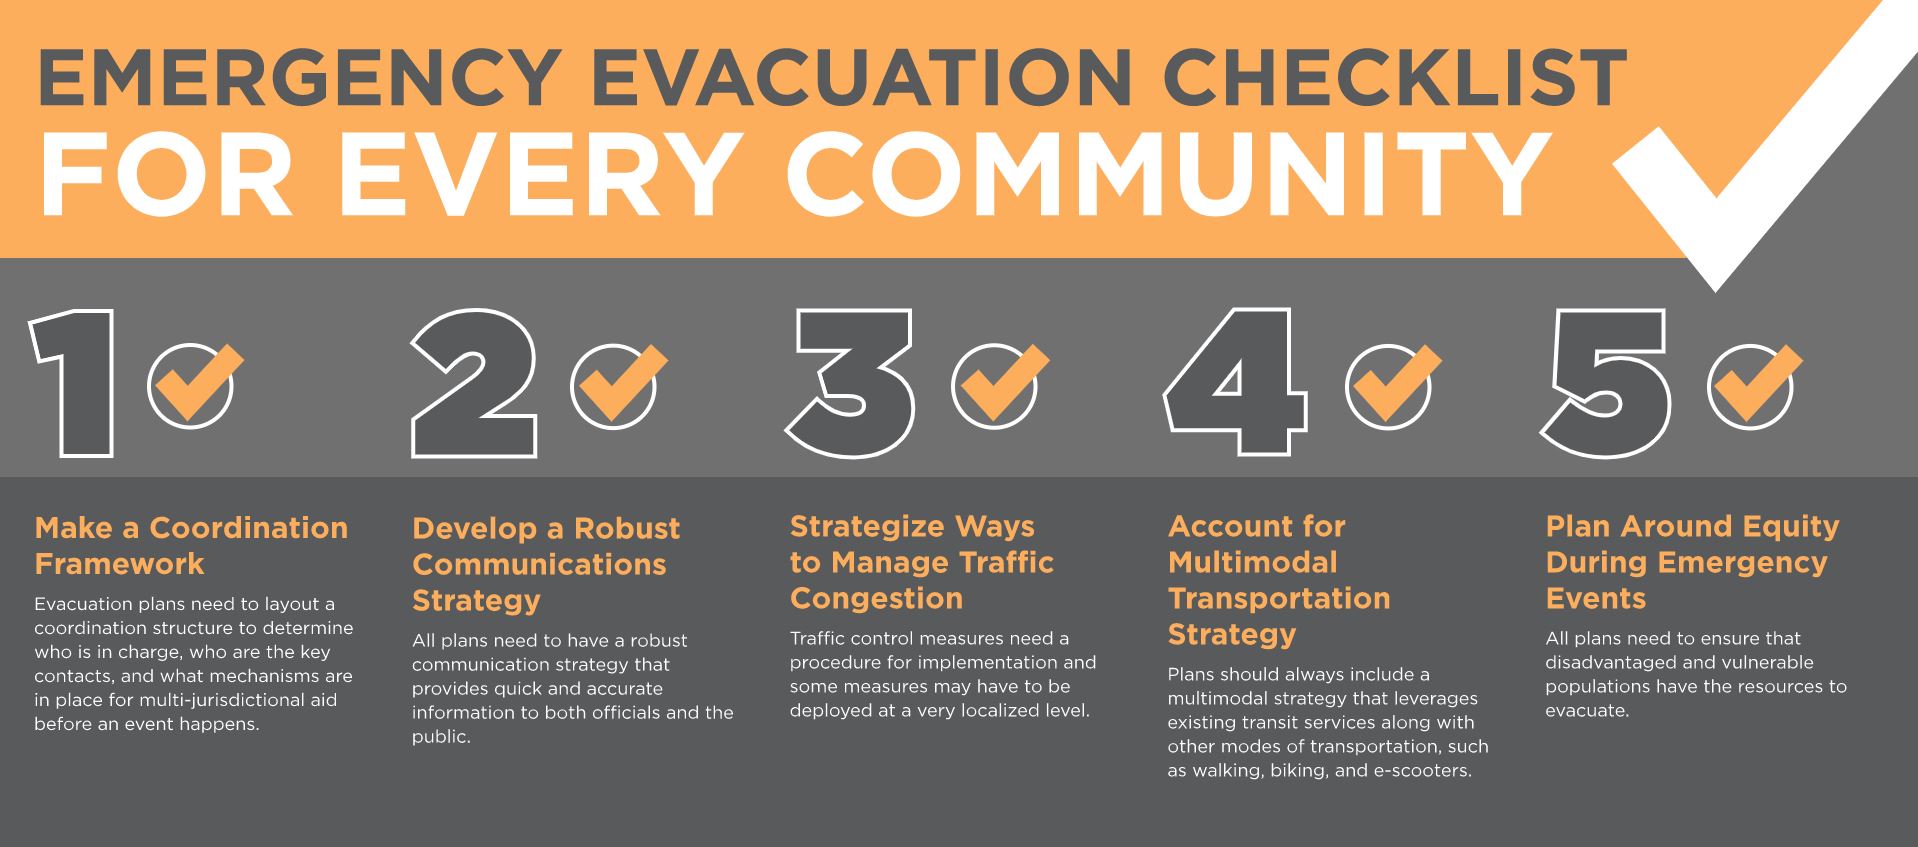 Emergency Evacuation Checklist for Every Community